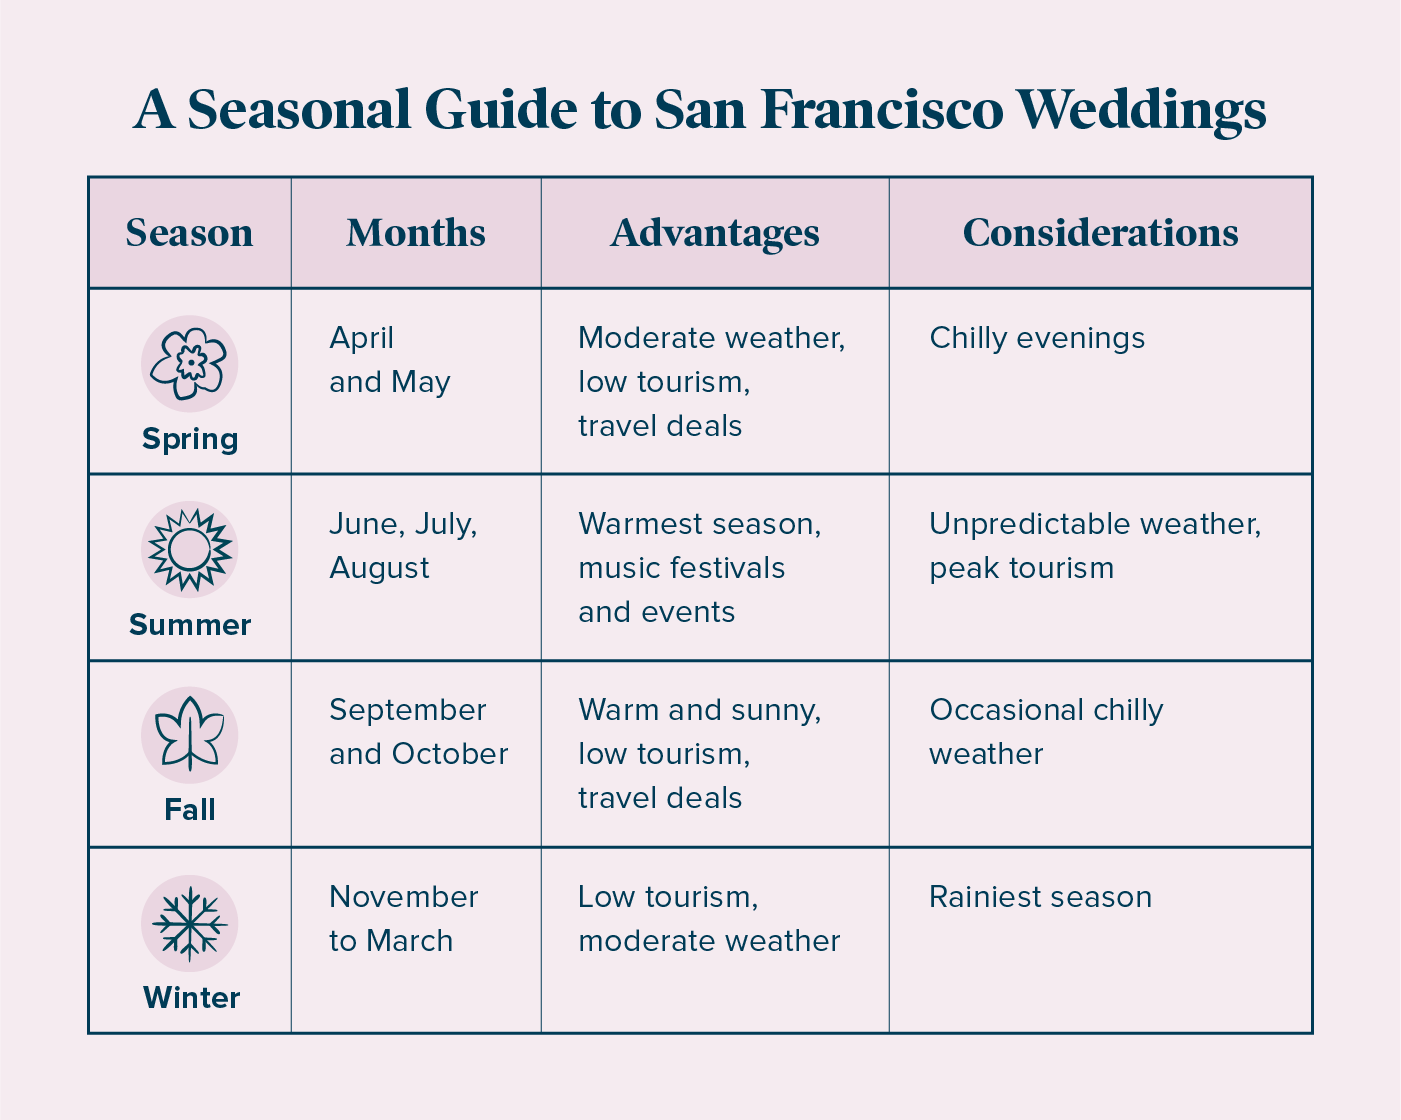 A Seasonal Guide to San Francisco Weddings